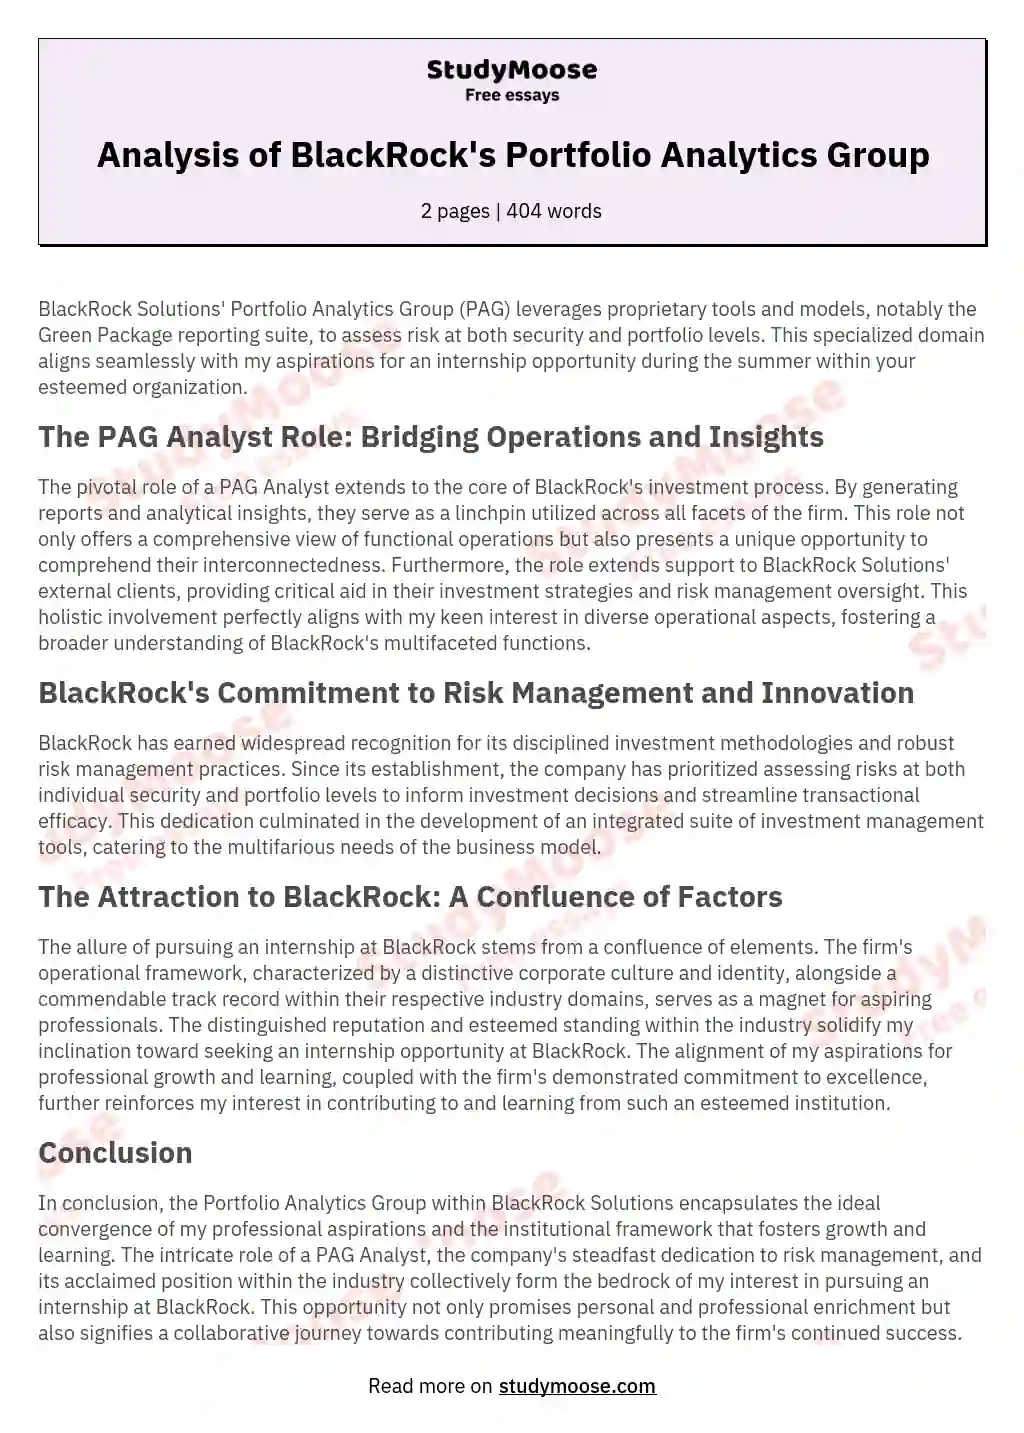 Analysis of BlackRock's Portfolio Analytics Group essay